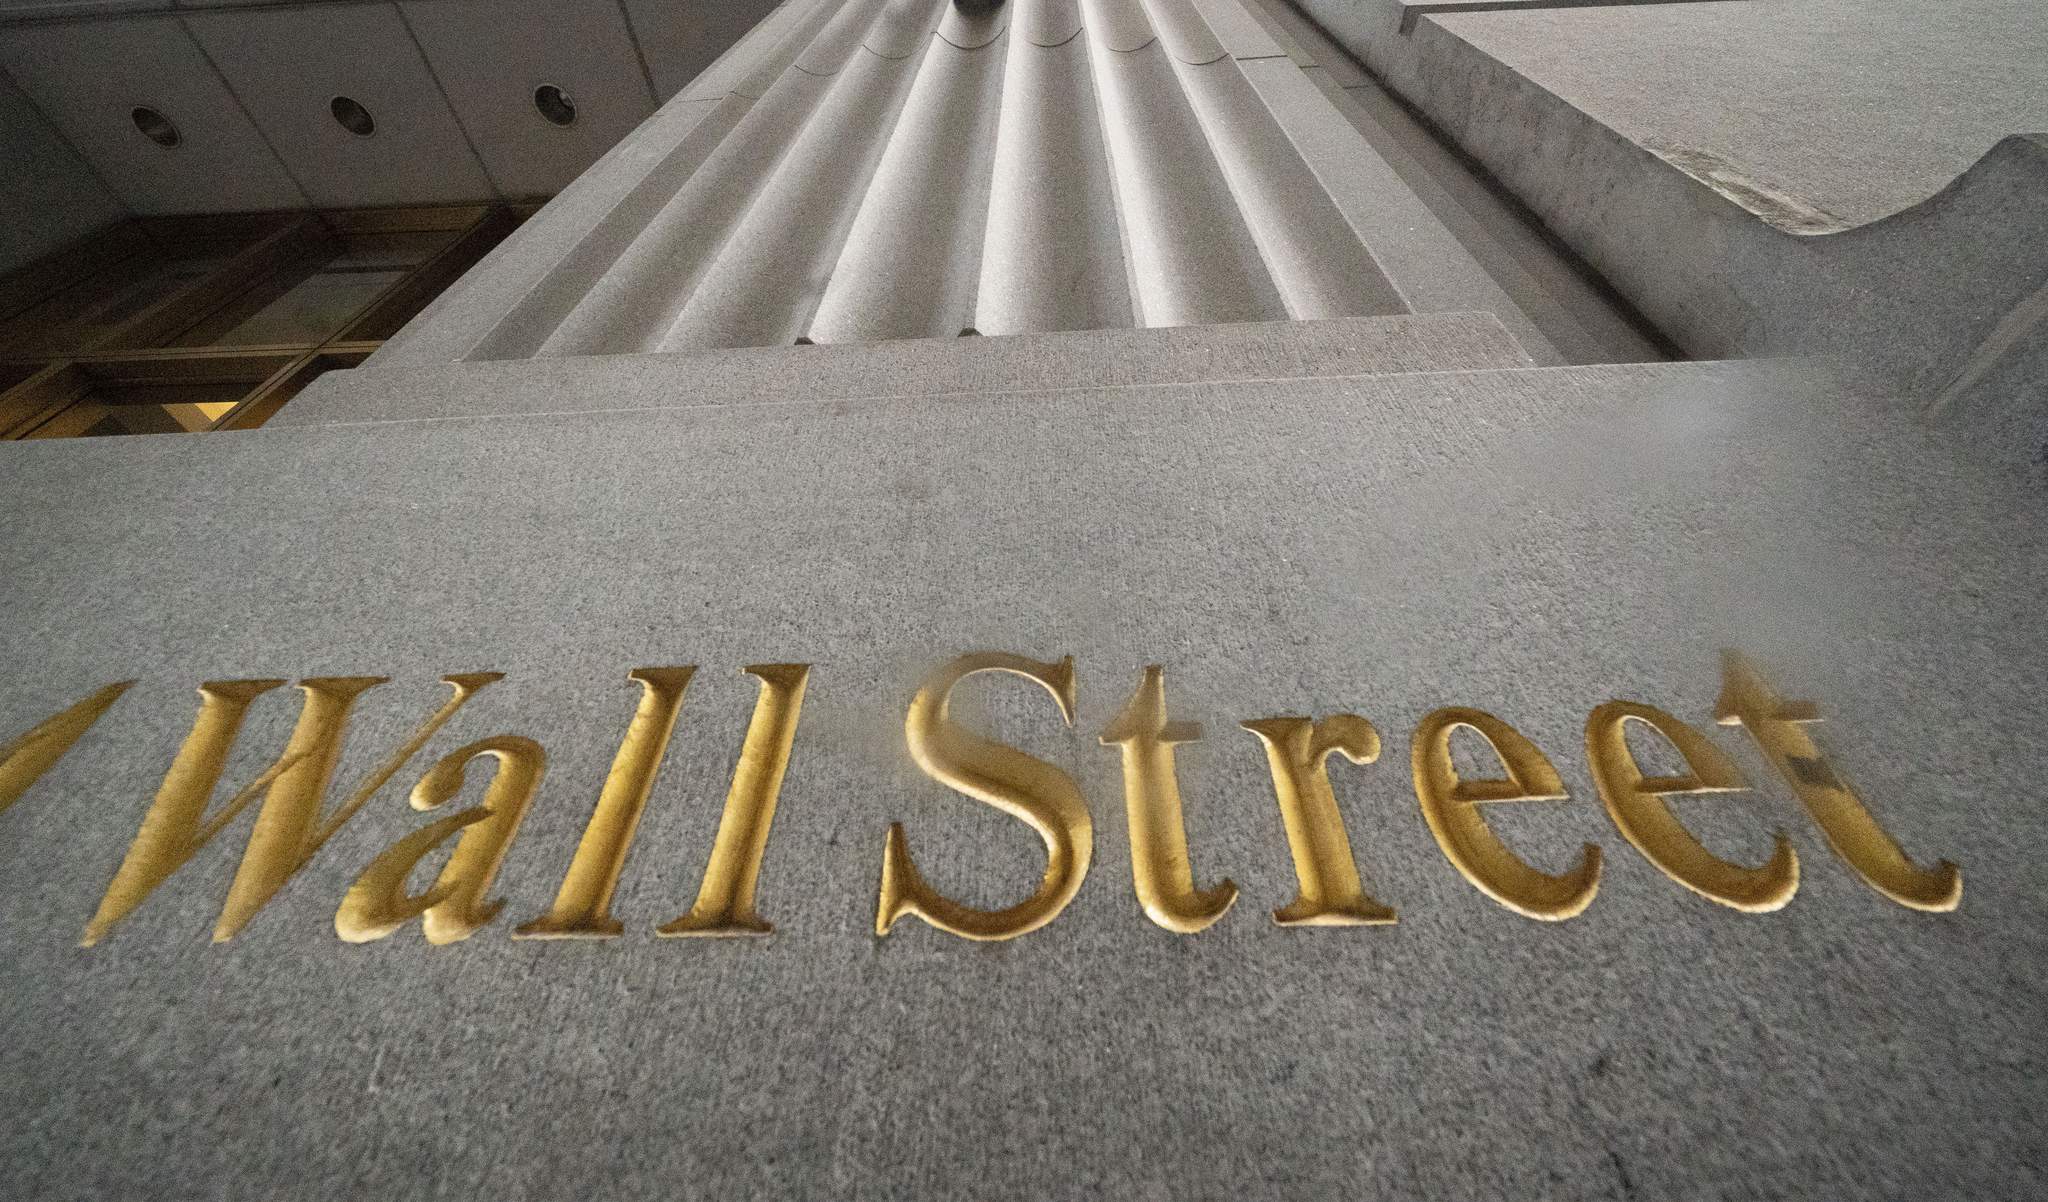 Asia stocks follow Wall Street down on renewed virus worries